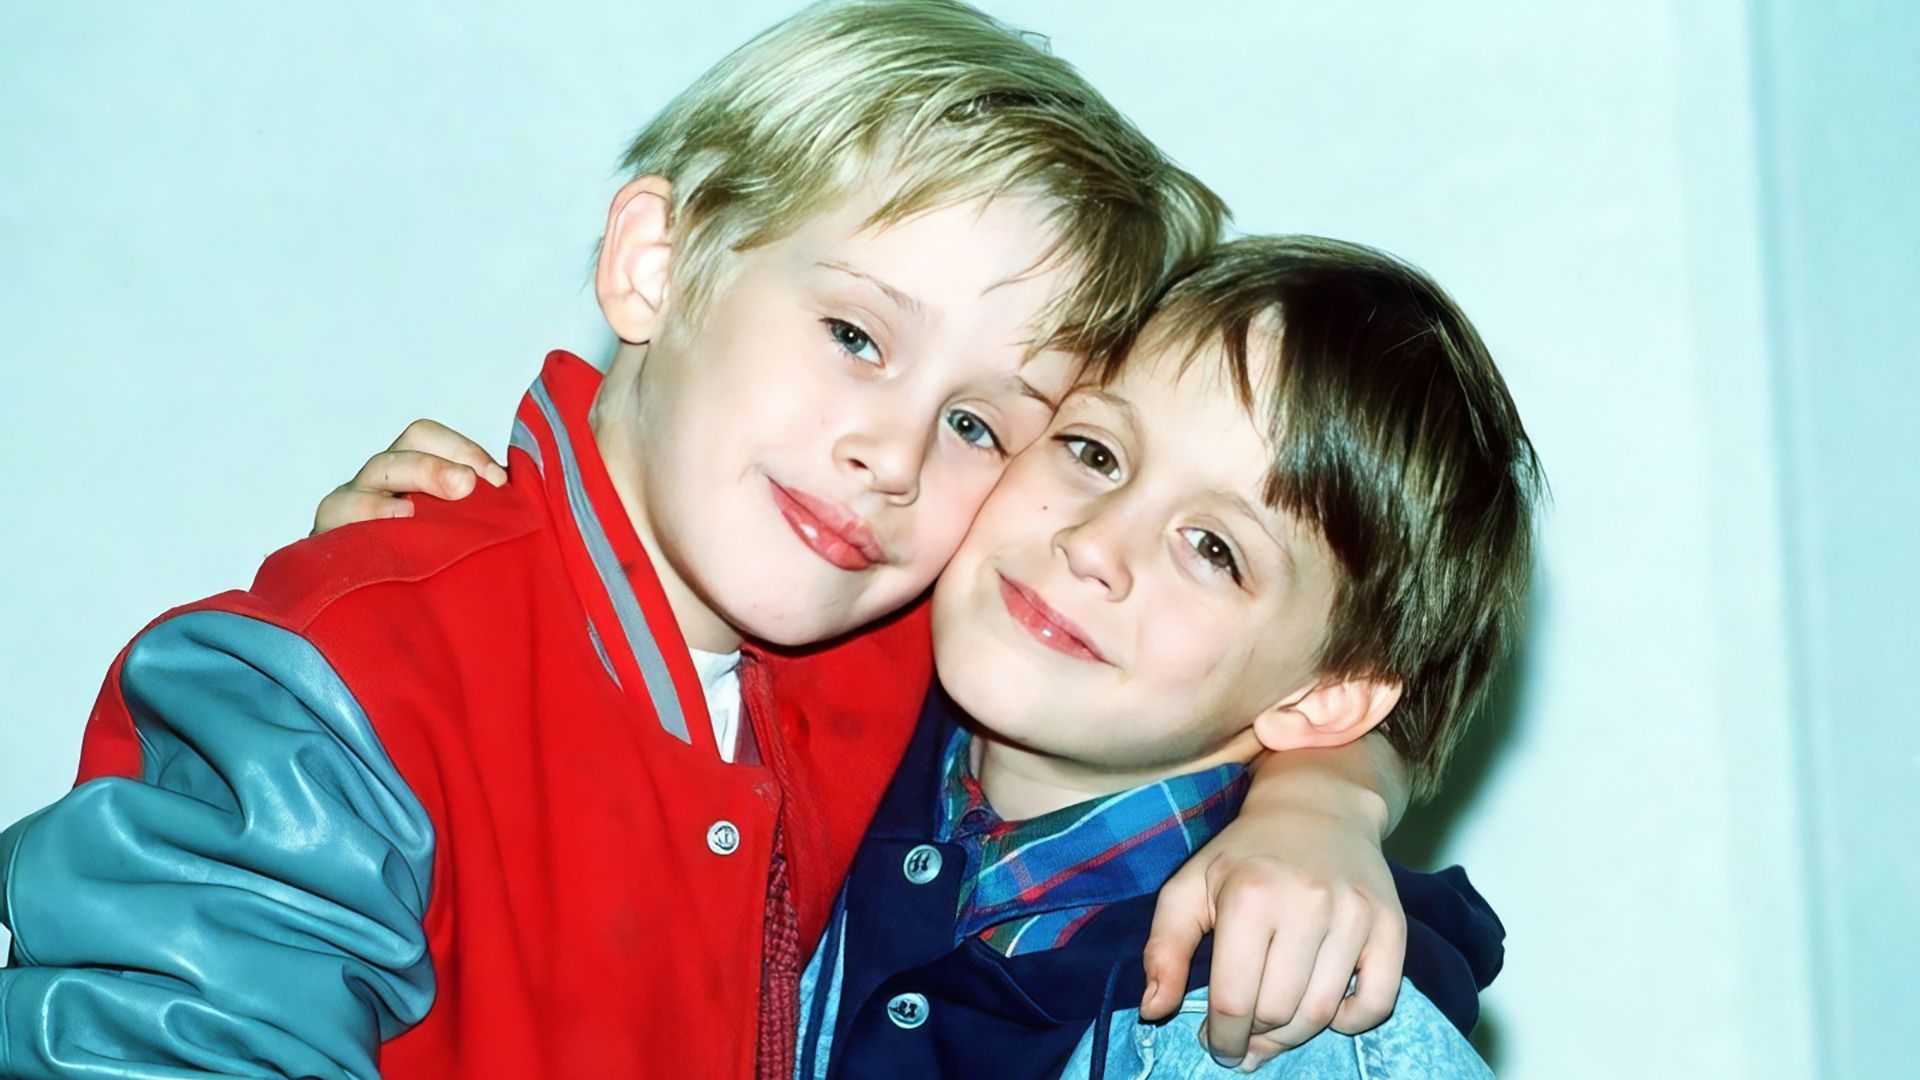 Kieran Culkin and Macaulay Culkin in childhood